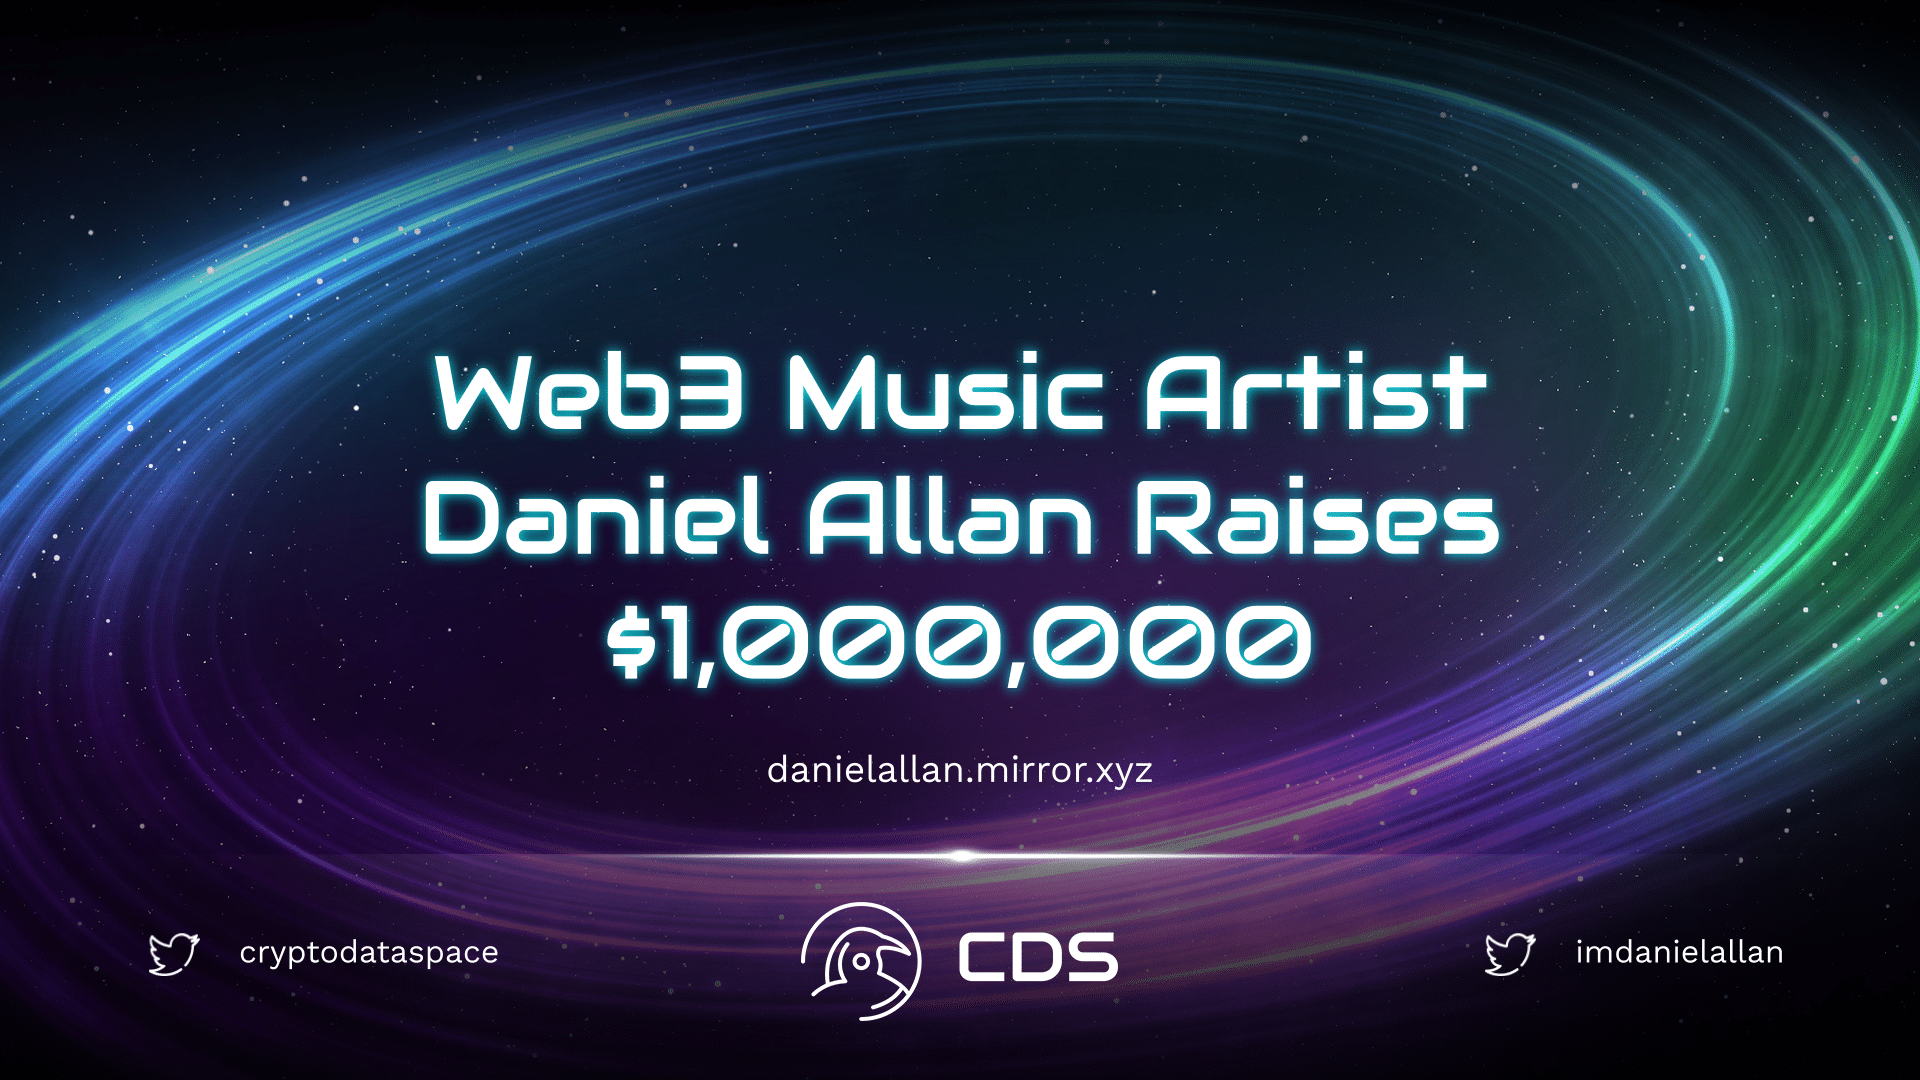 Web3 Music Artist Daniel Allan Raises $1,000,000